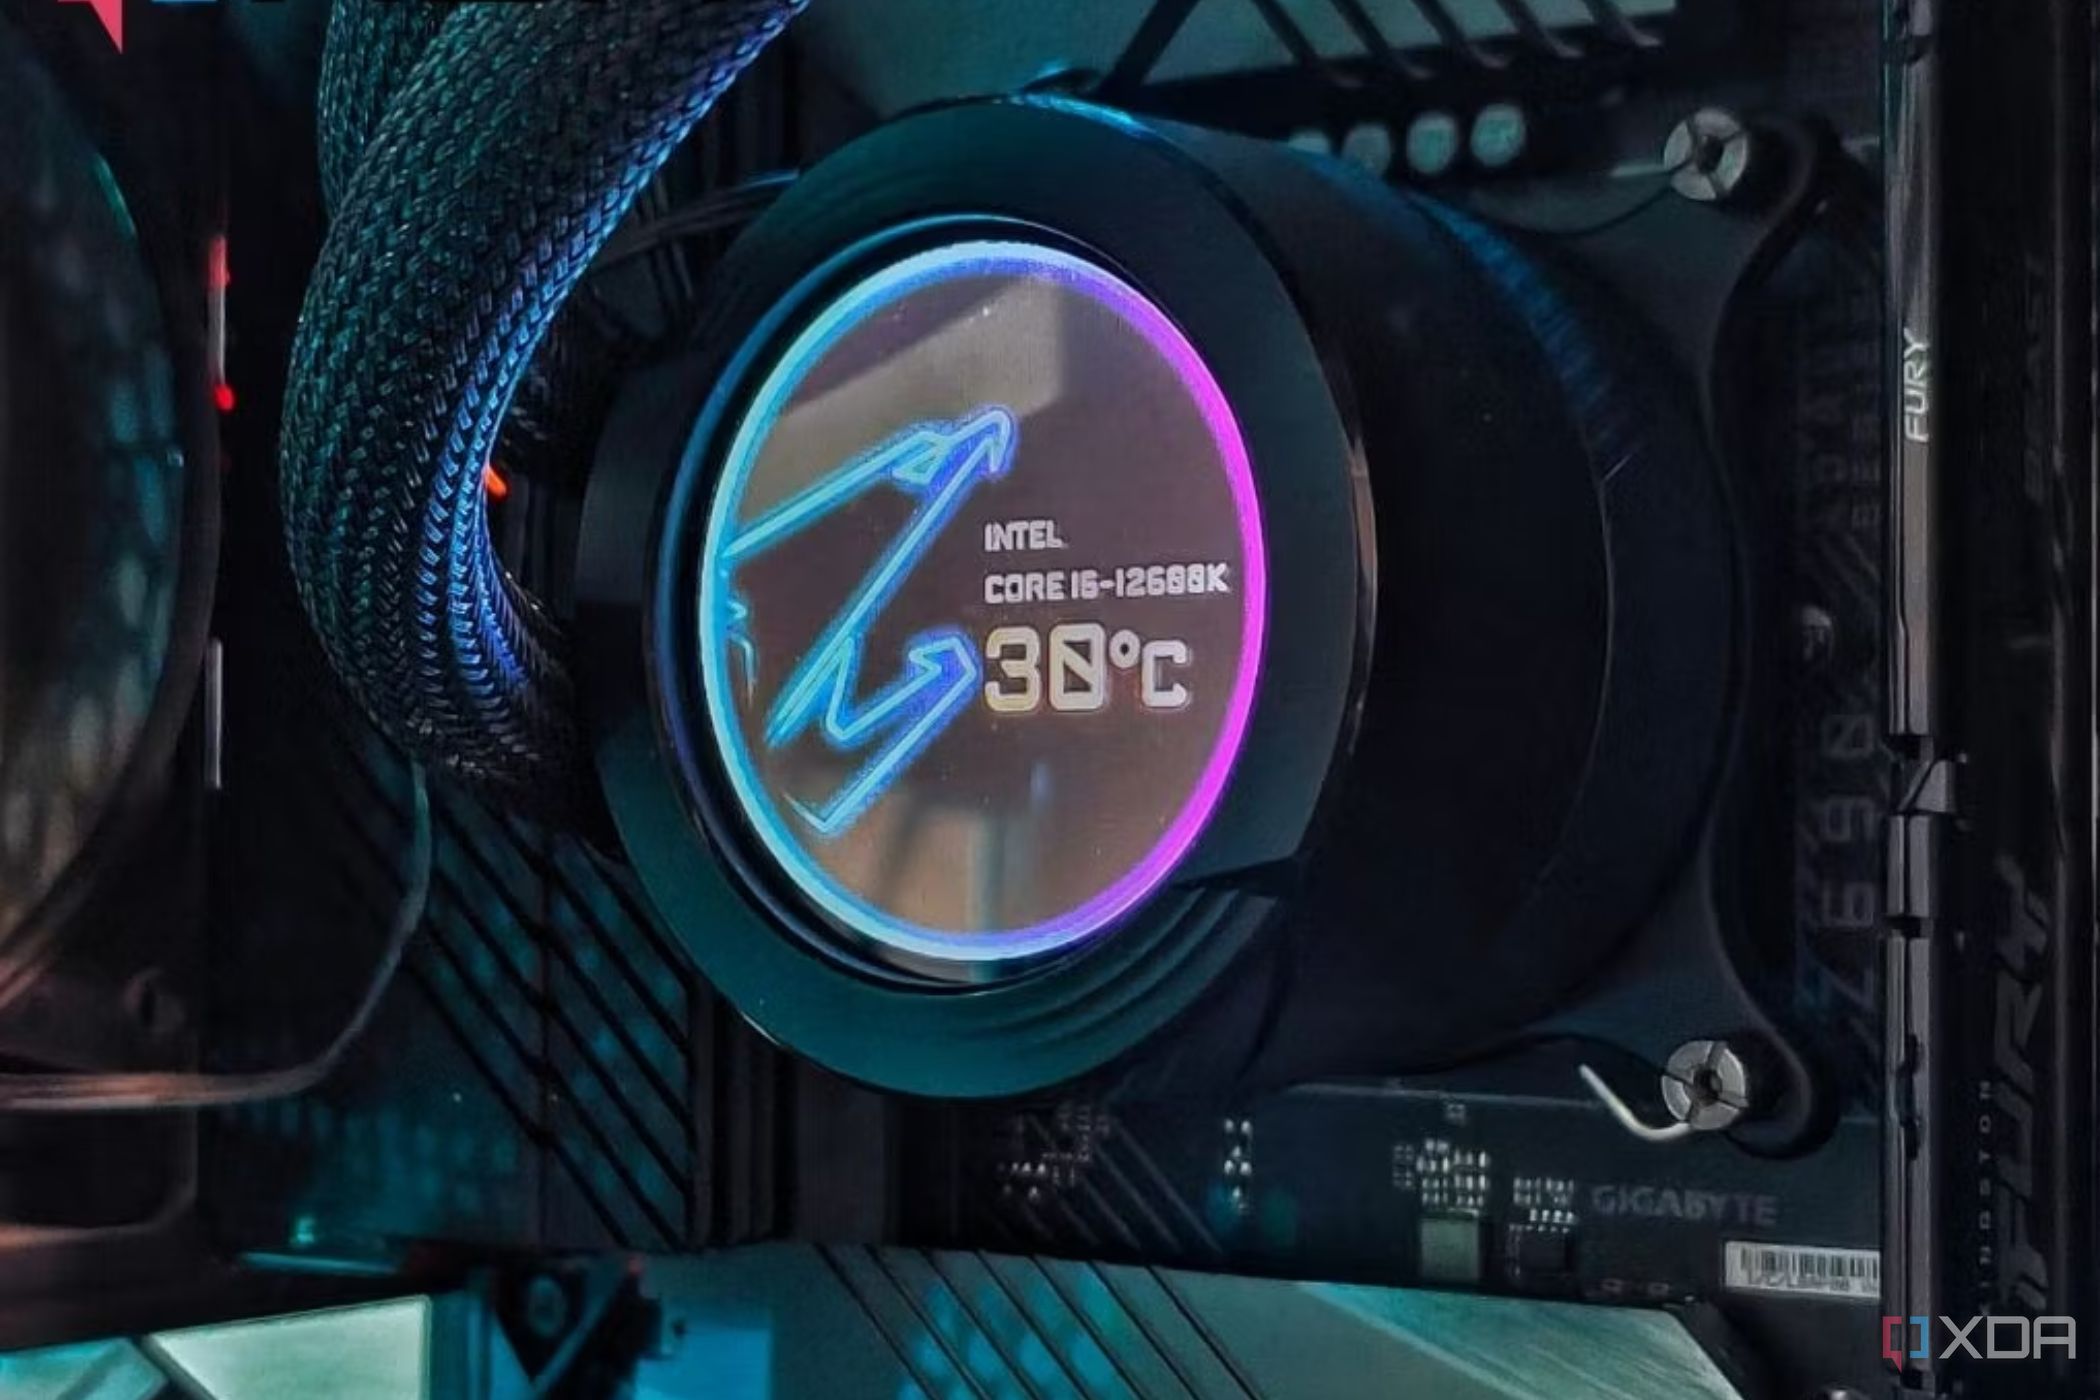 An image showing a Gigabyte CPU cooler displaying CPU temperature.